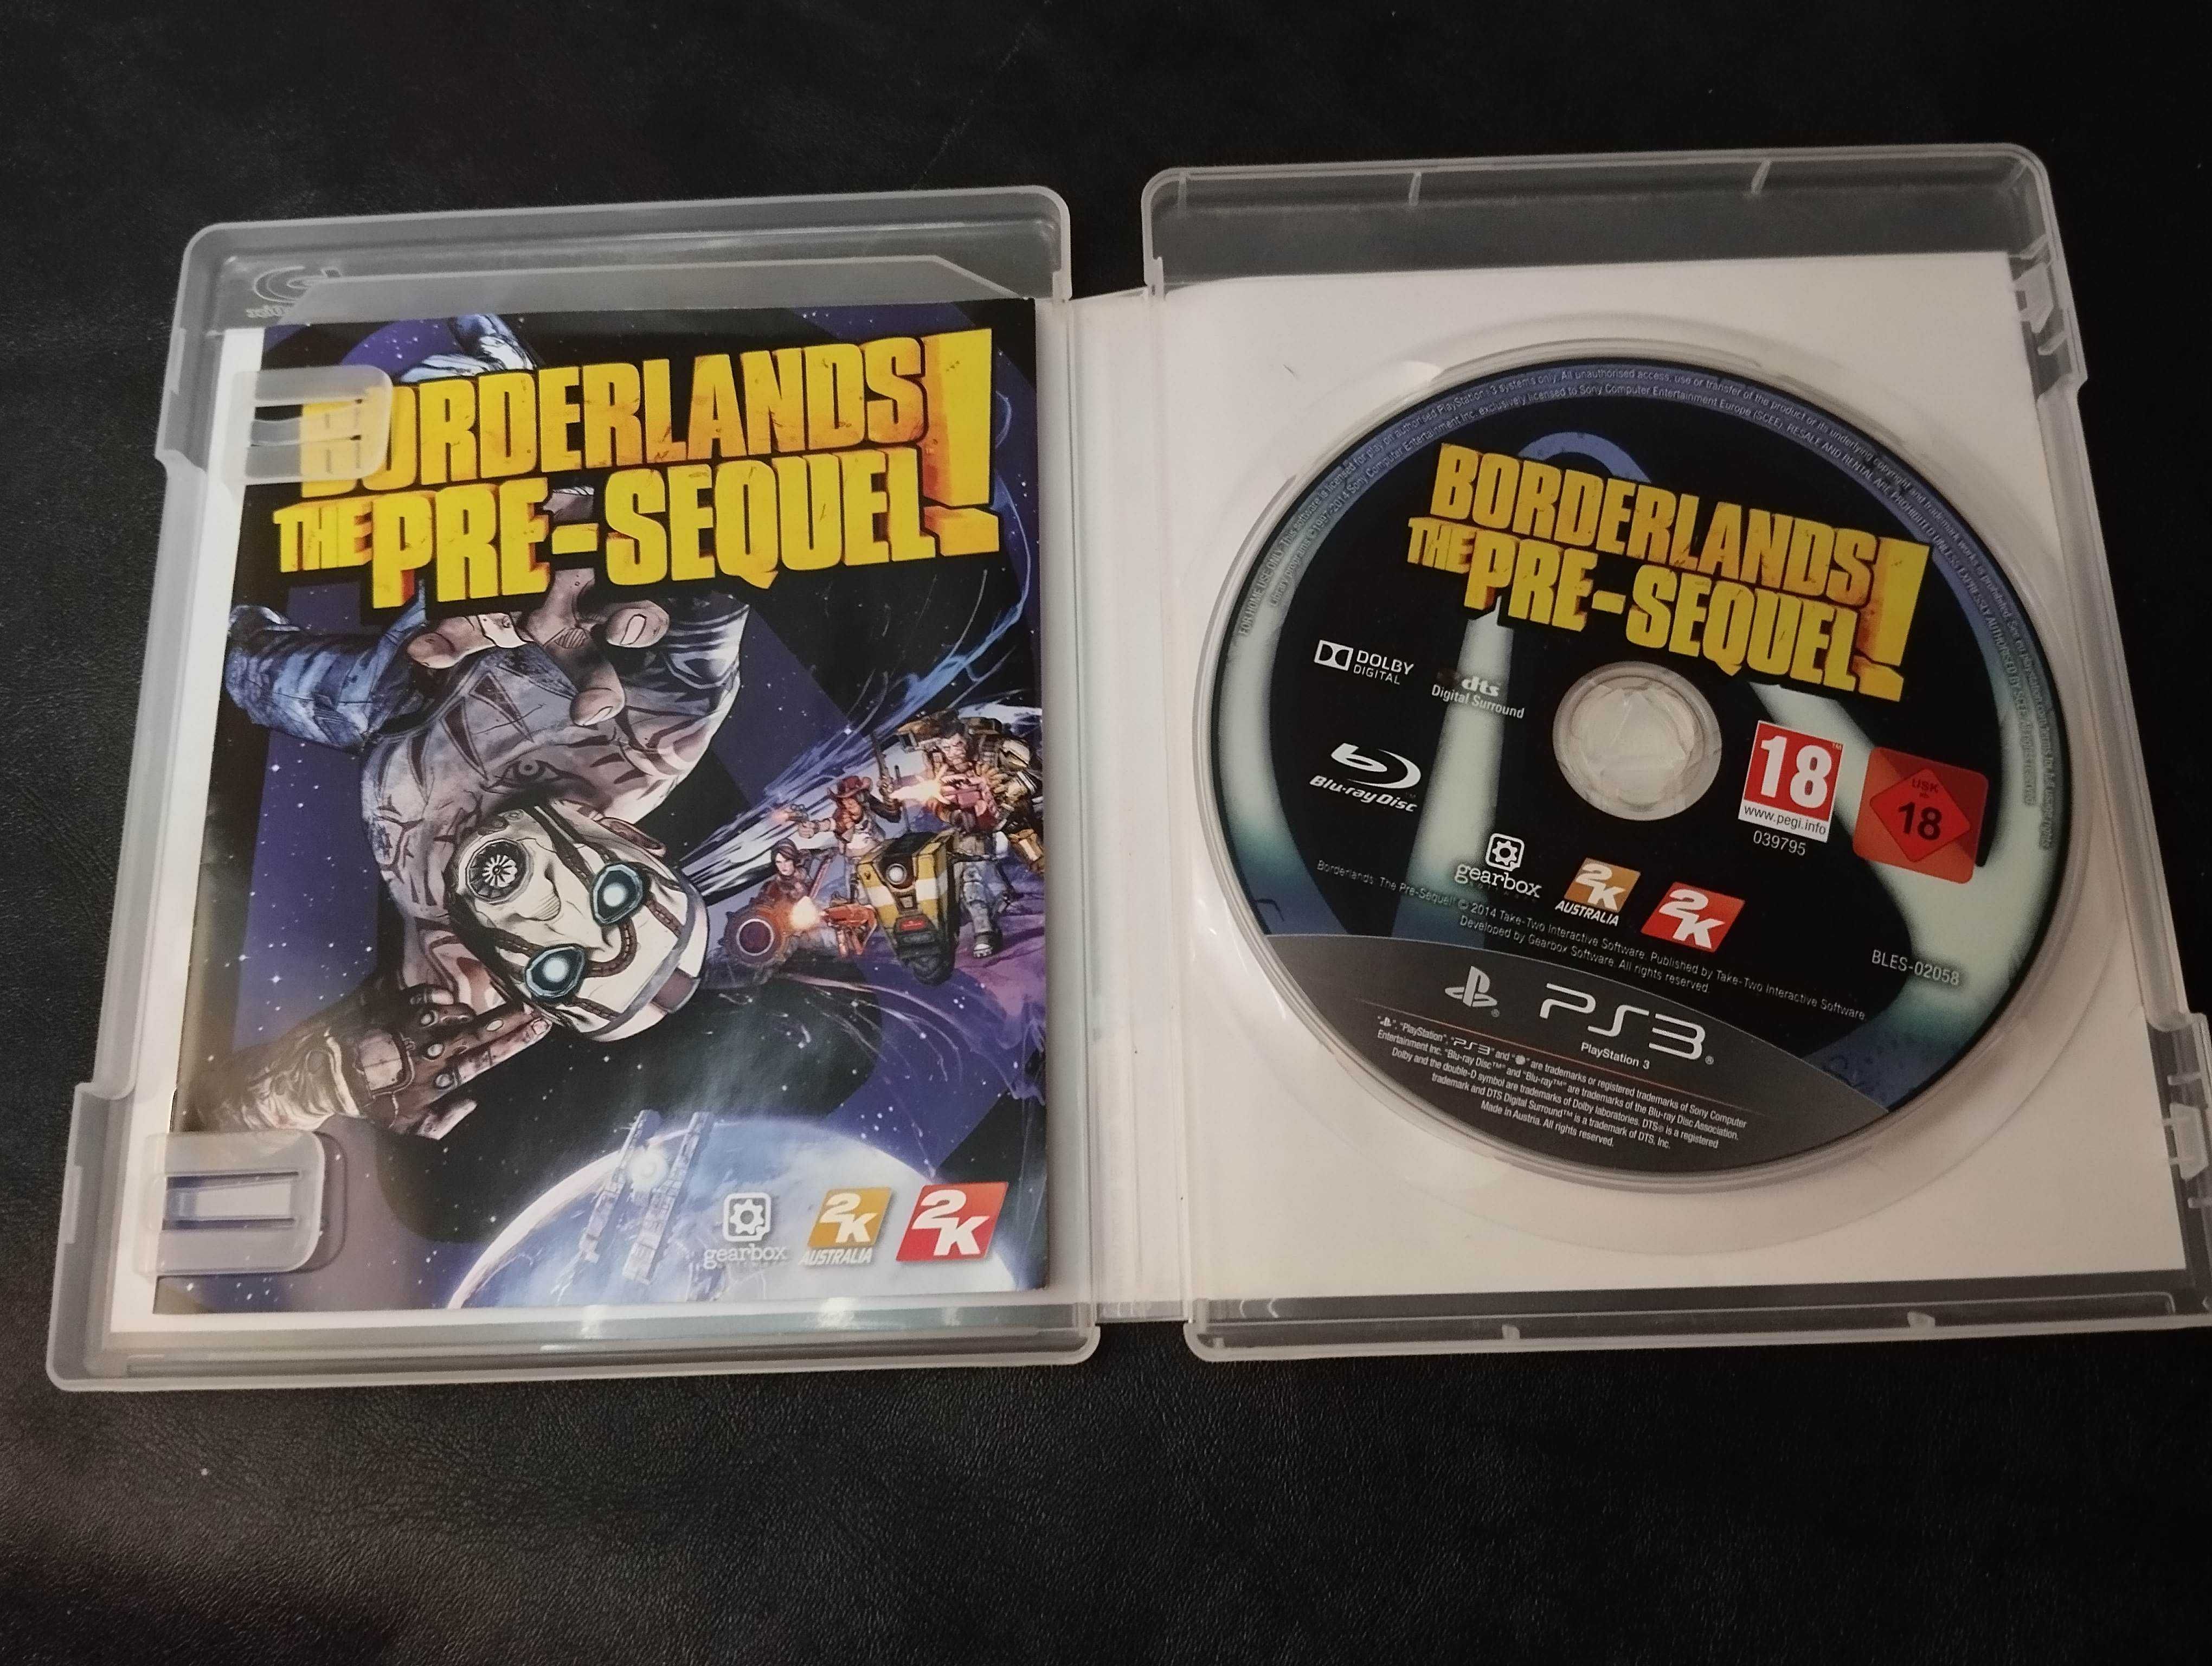 Borderlands The Pre-Sequel - PS3 - strzelanka, duży wybór gier